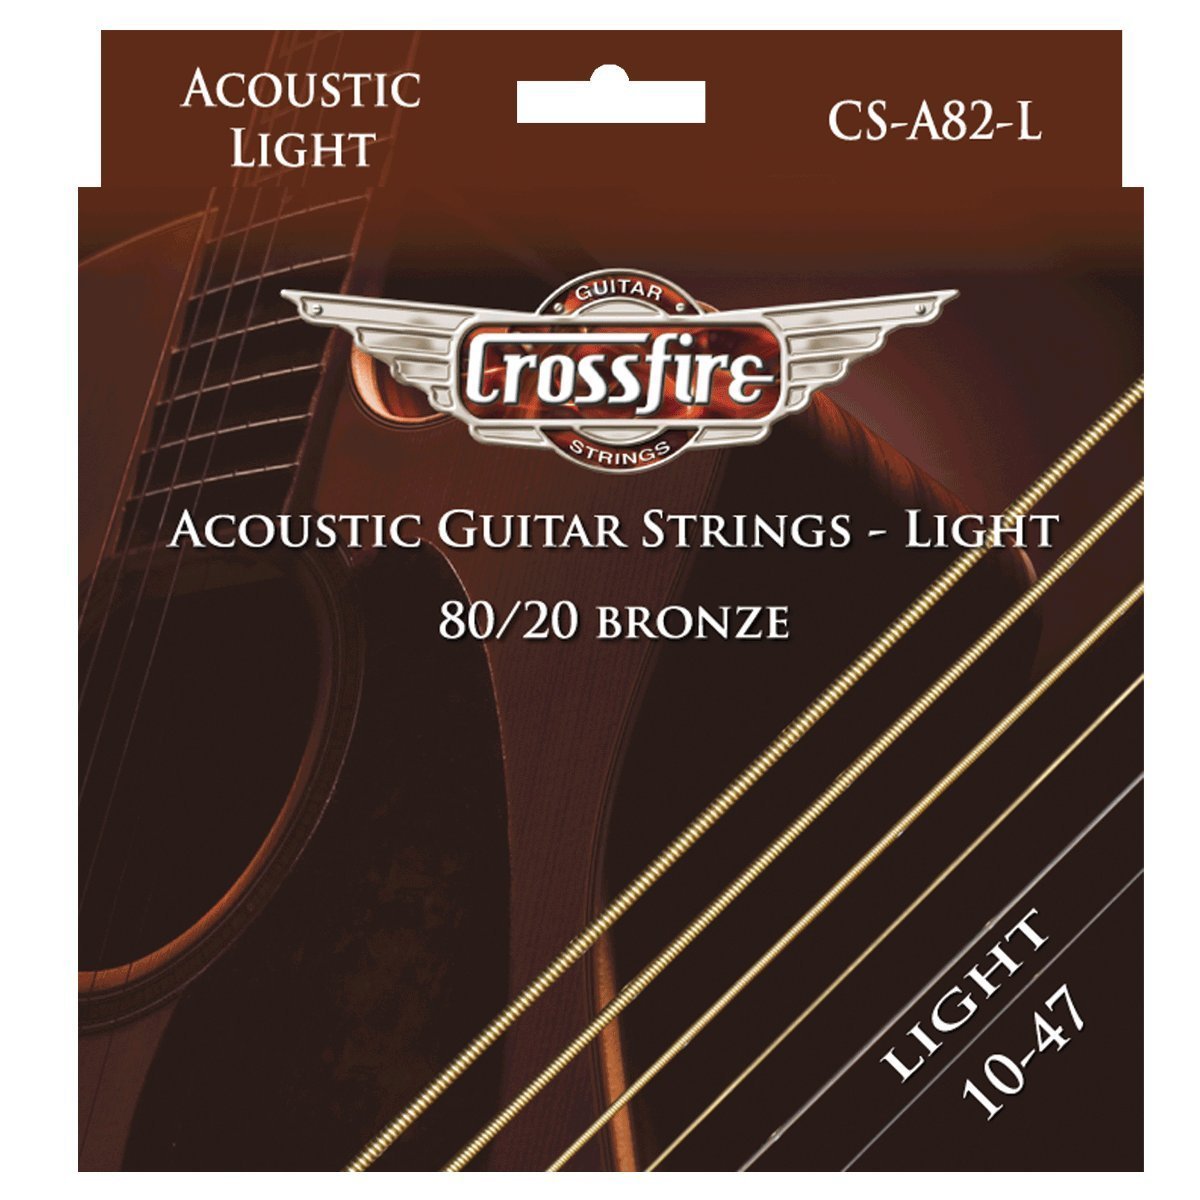 Crossfire Light 80/20 Bronze Acoustic Guitar Strings (10-47)-CS-A82-L